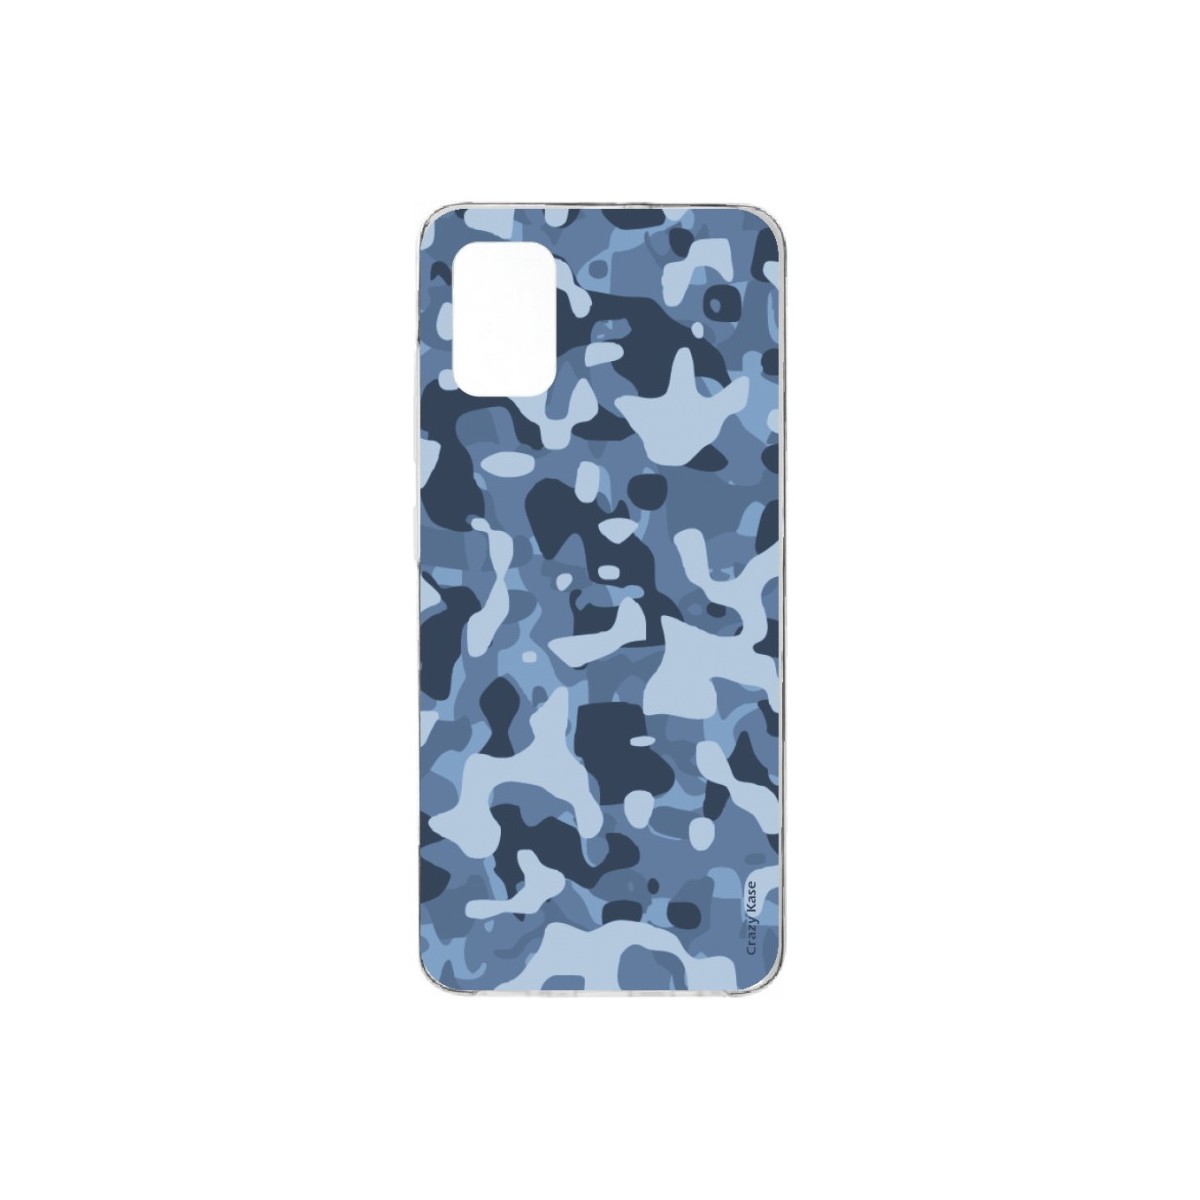 Coque Samsung Galaxy A71 souple Camouflage militaire bleu Crazy Kase